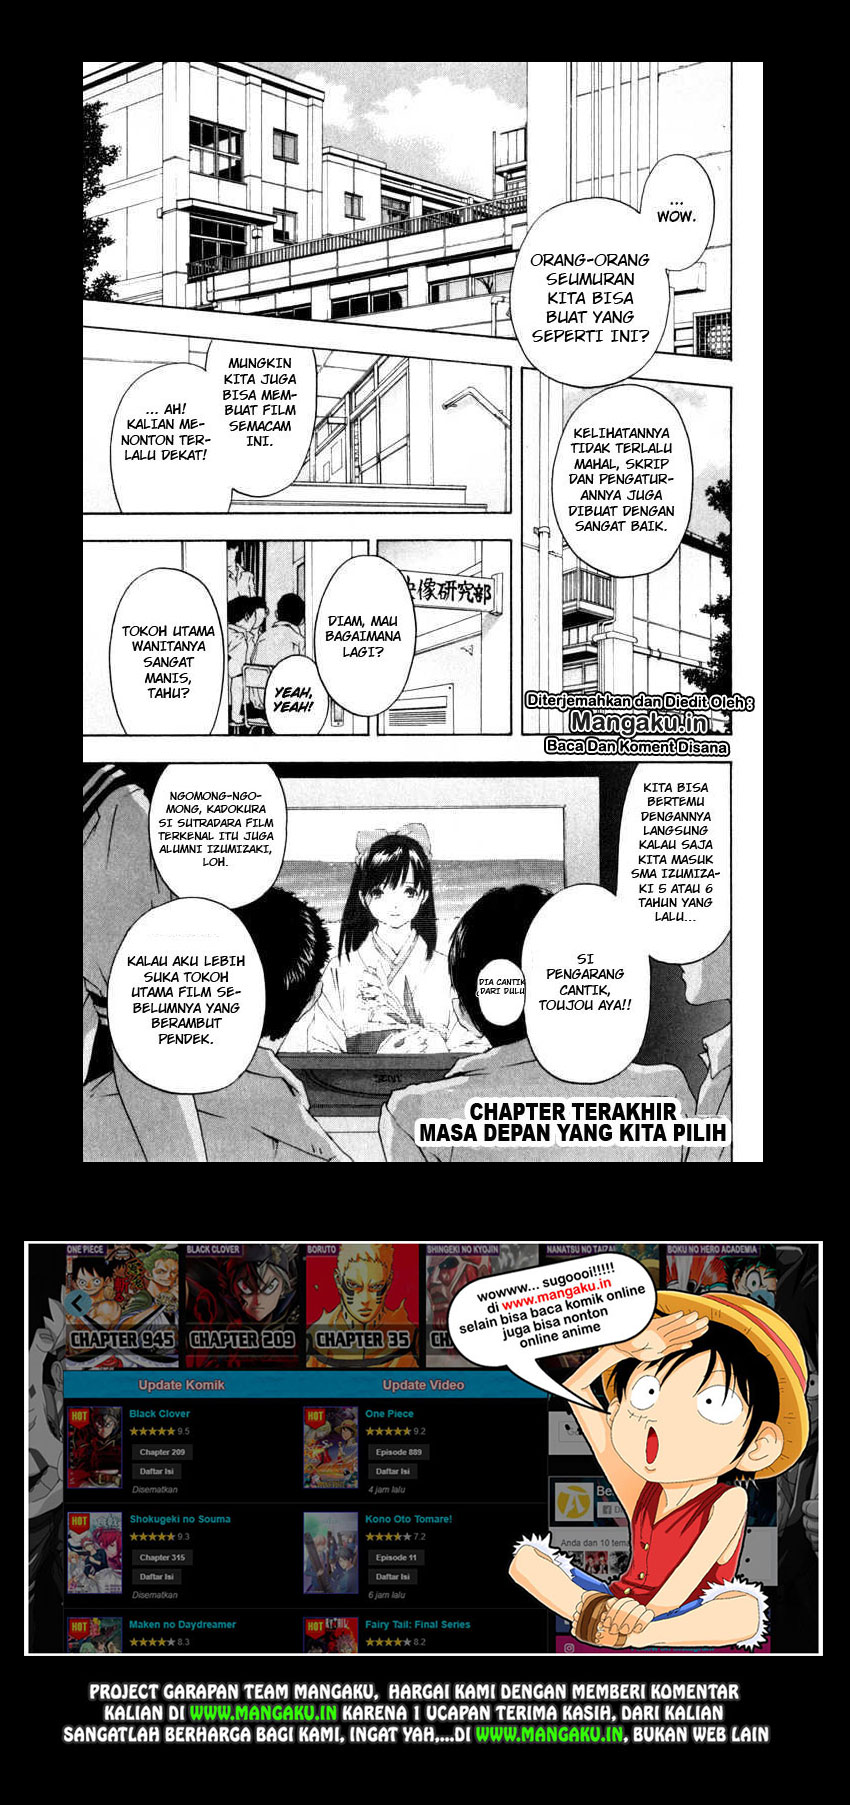 Ichigo 100%: Chapter 167 - Page 1